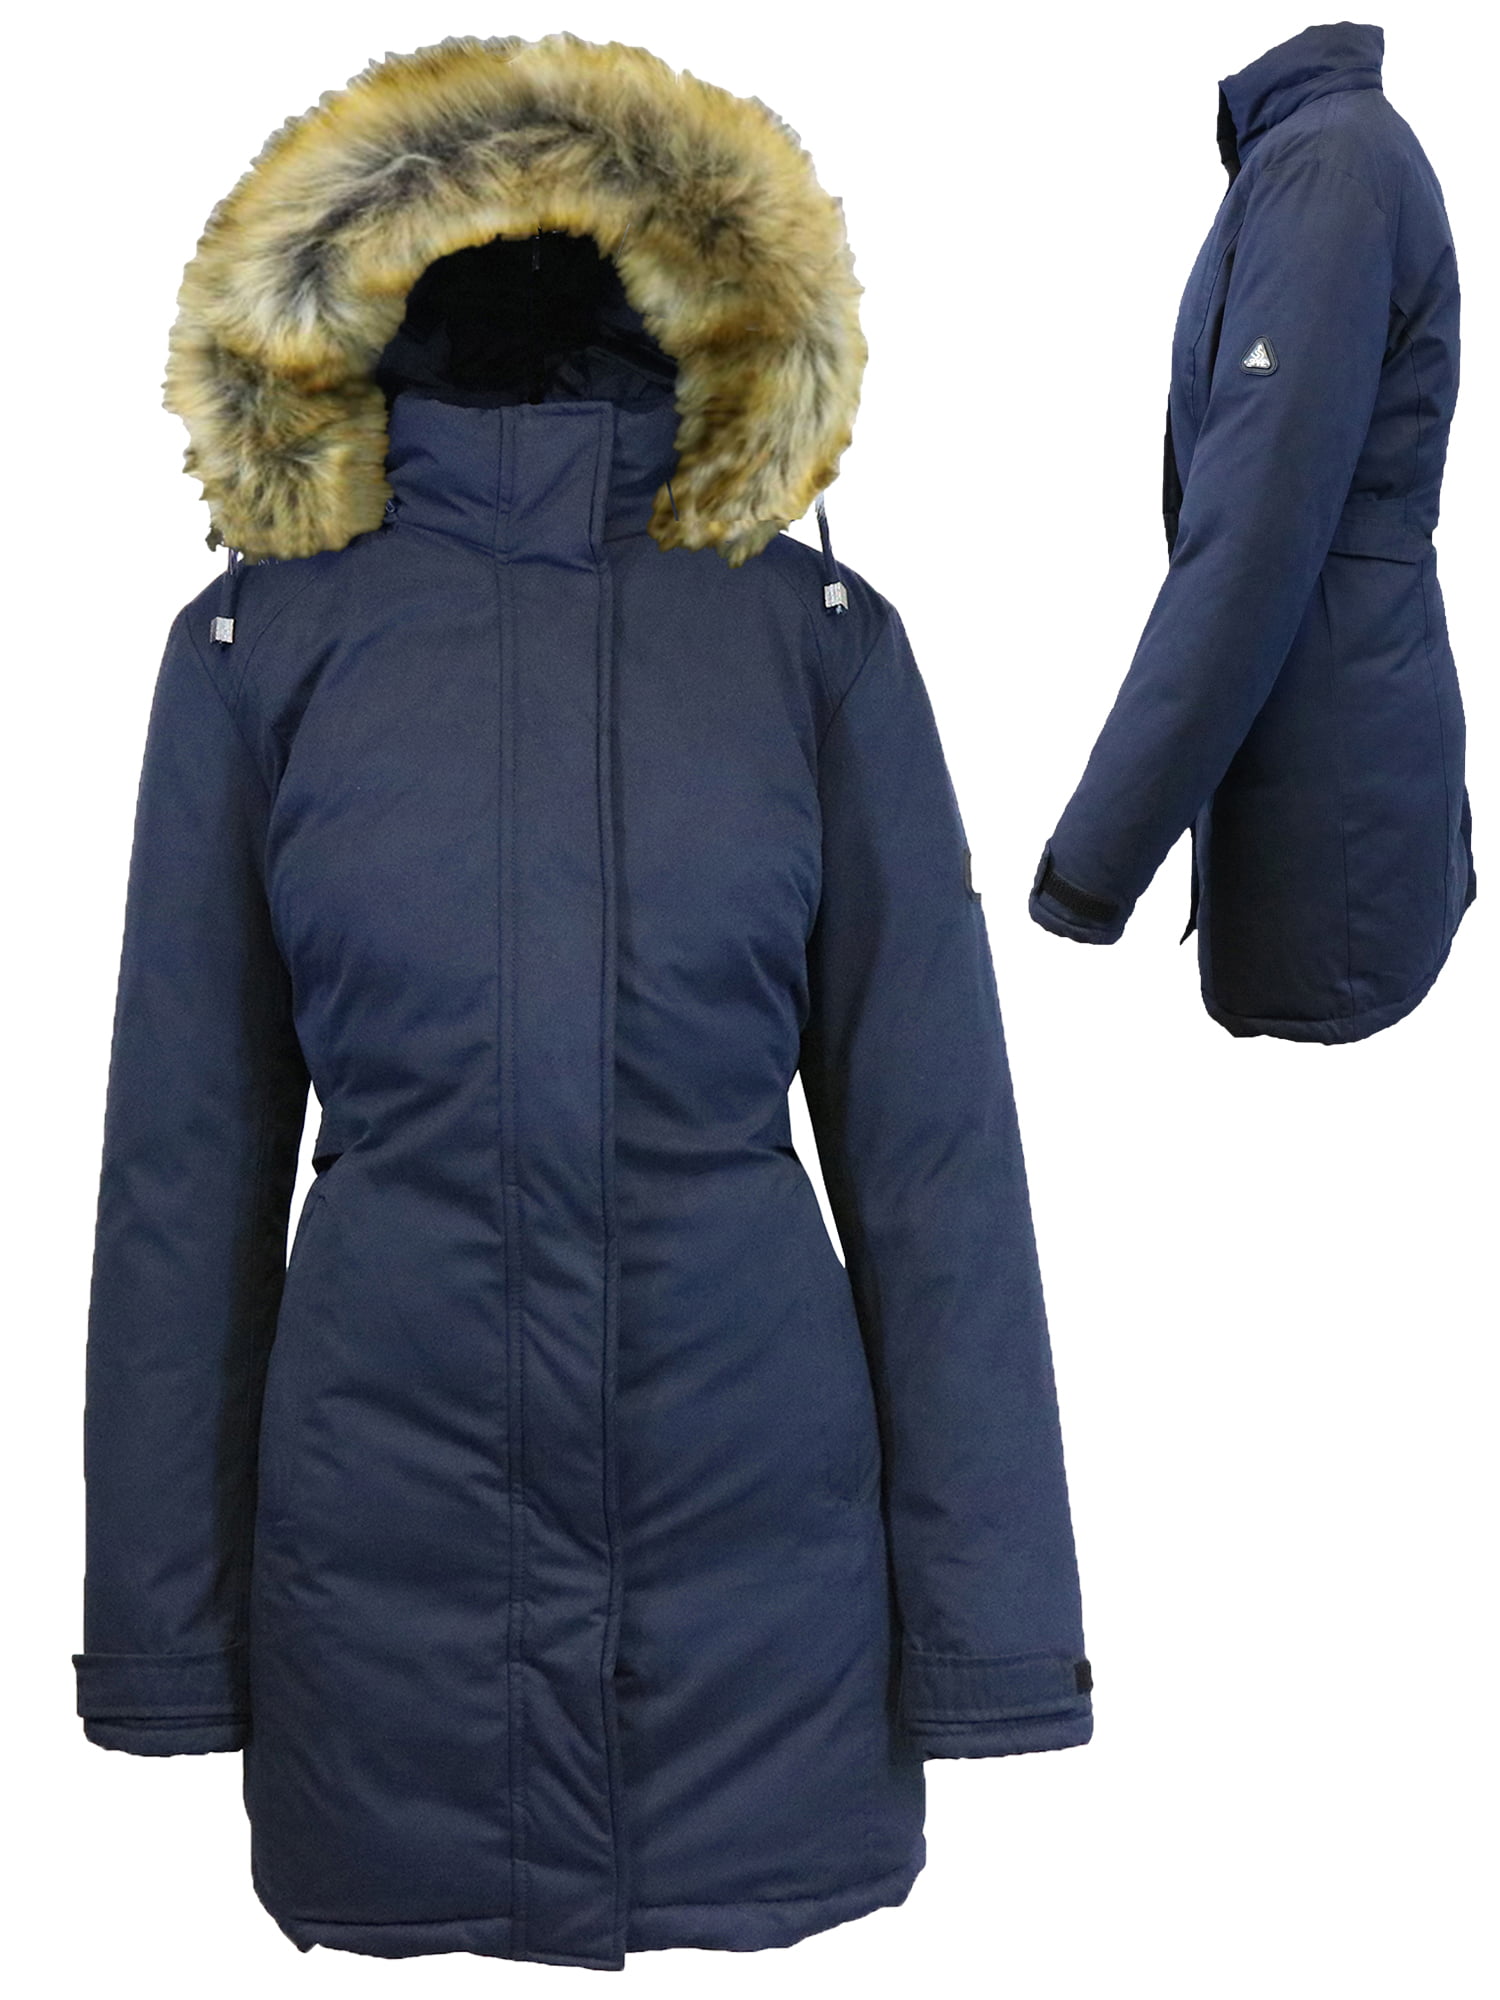 Details about   Winter Parka Women Jacket Windproof Long Design Premium Look Hooded Coat Gift 